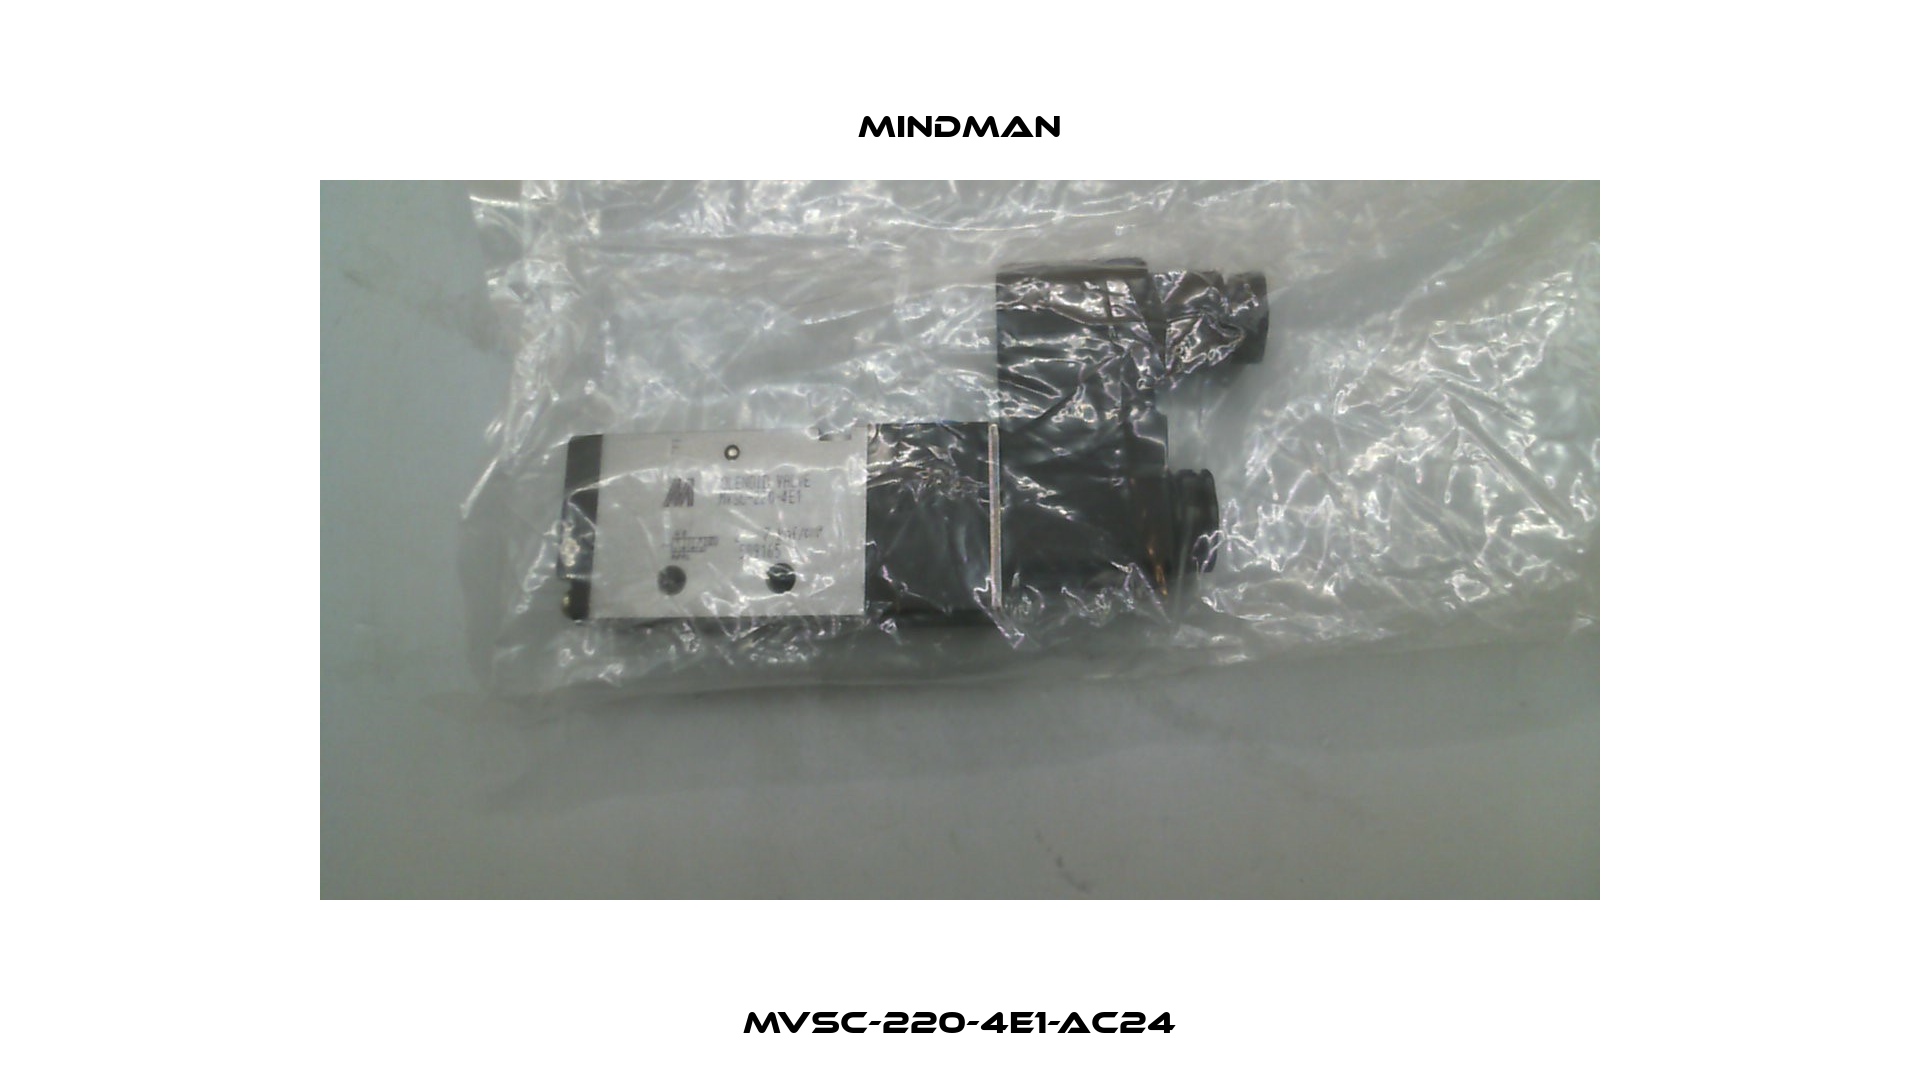 MVSC-220-4E1-AC24 Mindman